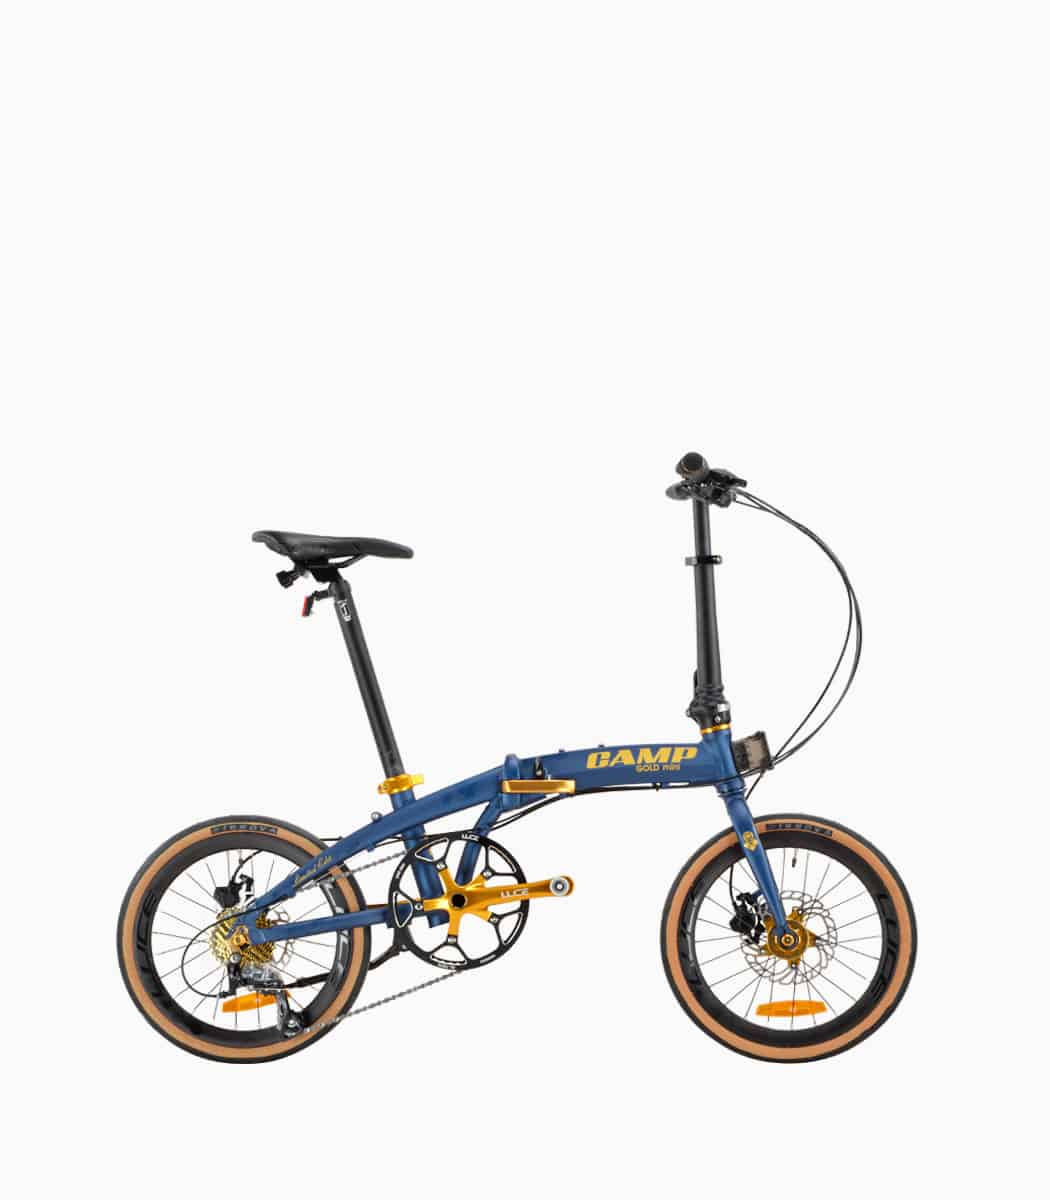 CAMP GOLD Mini (MATT BLUE) foldable bicycle right